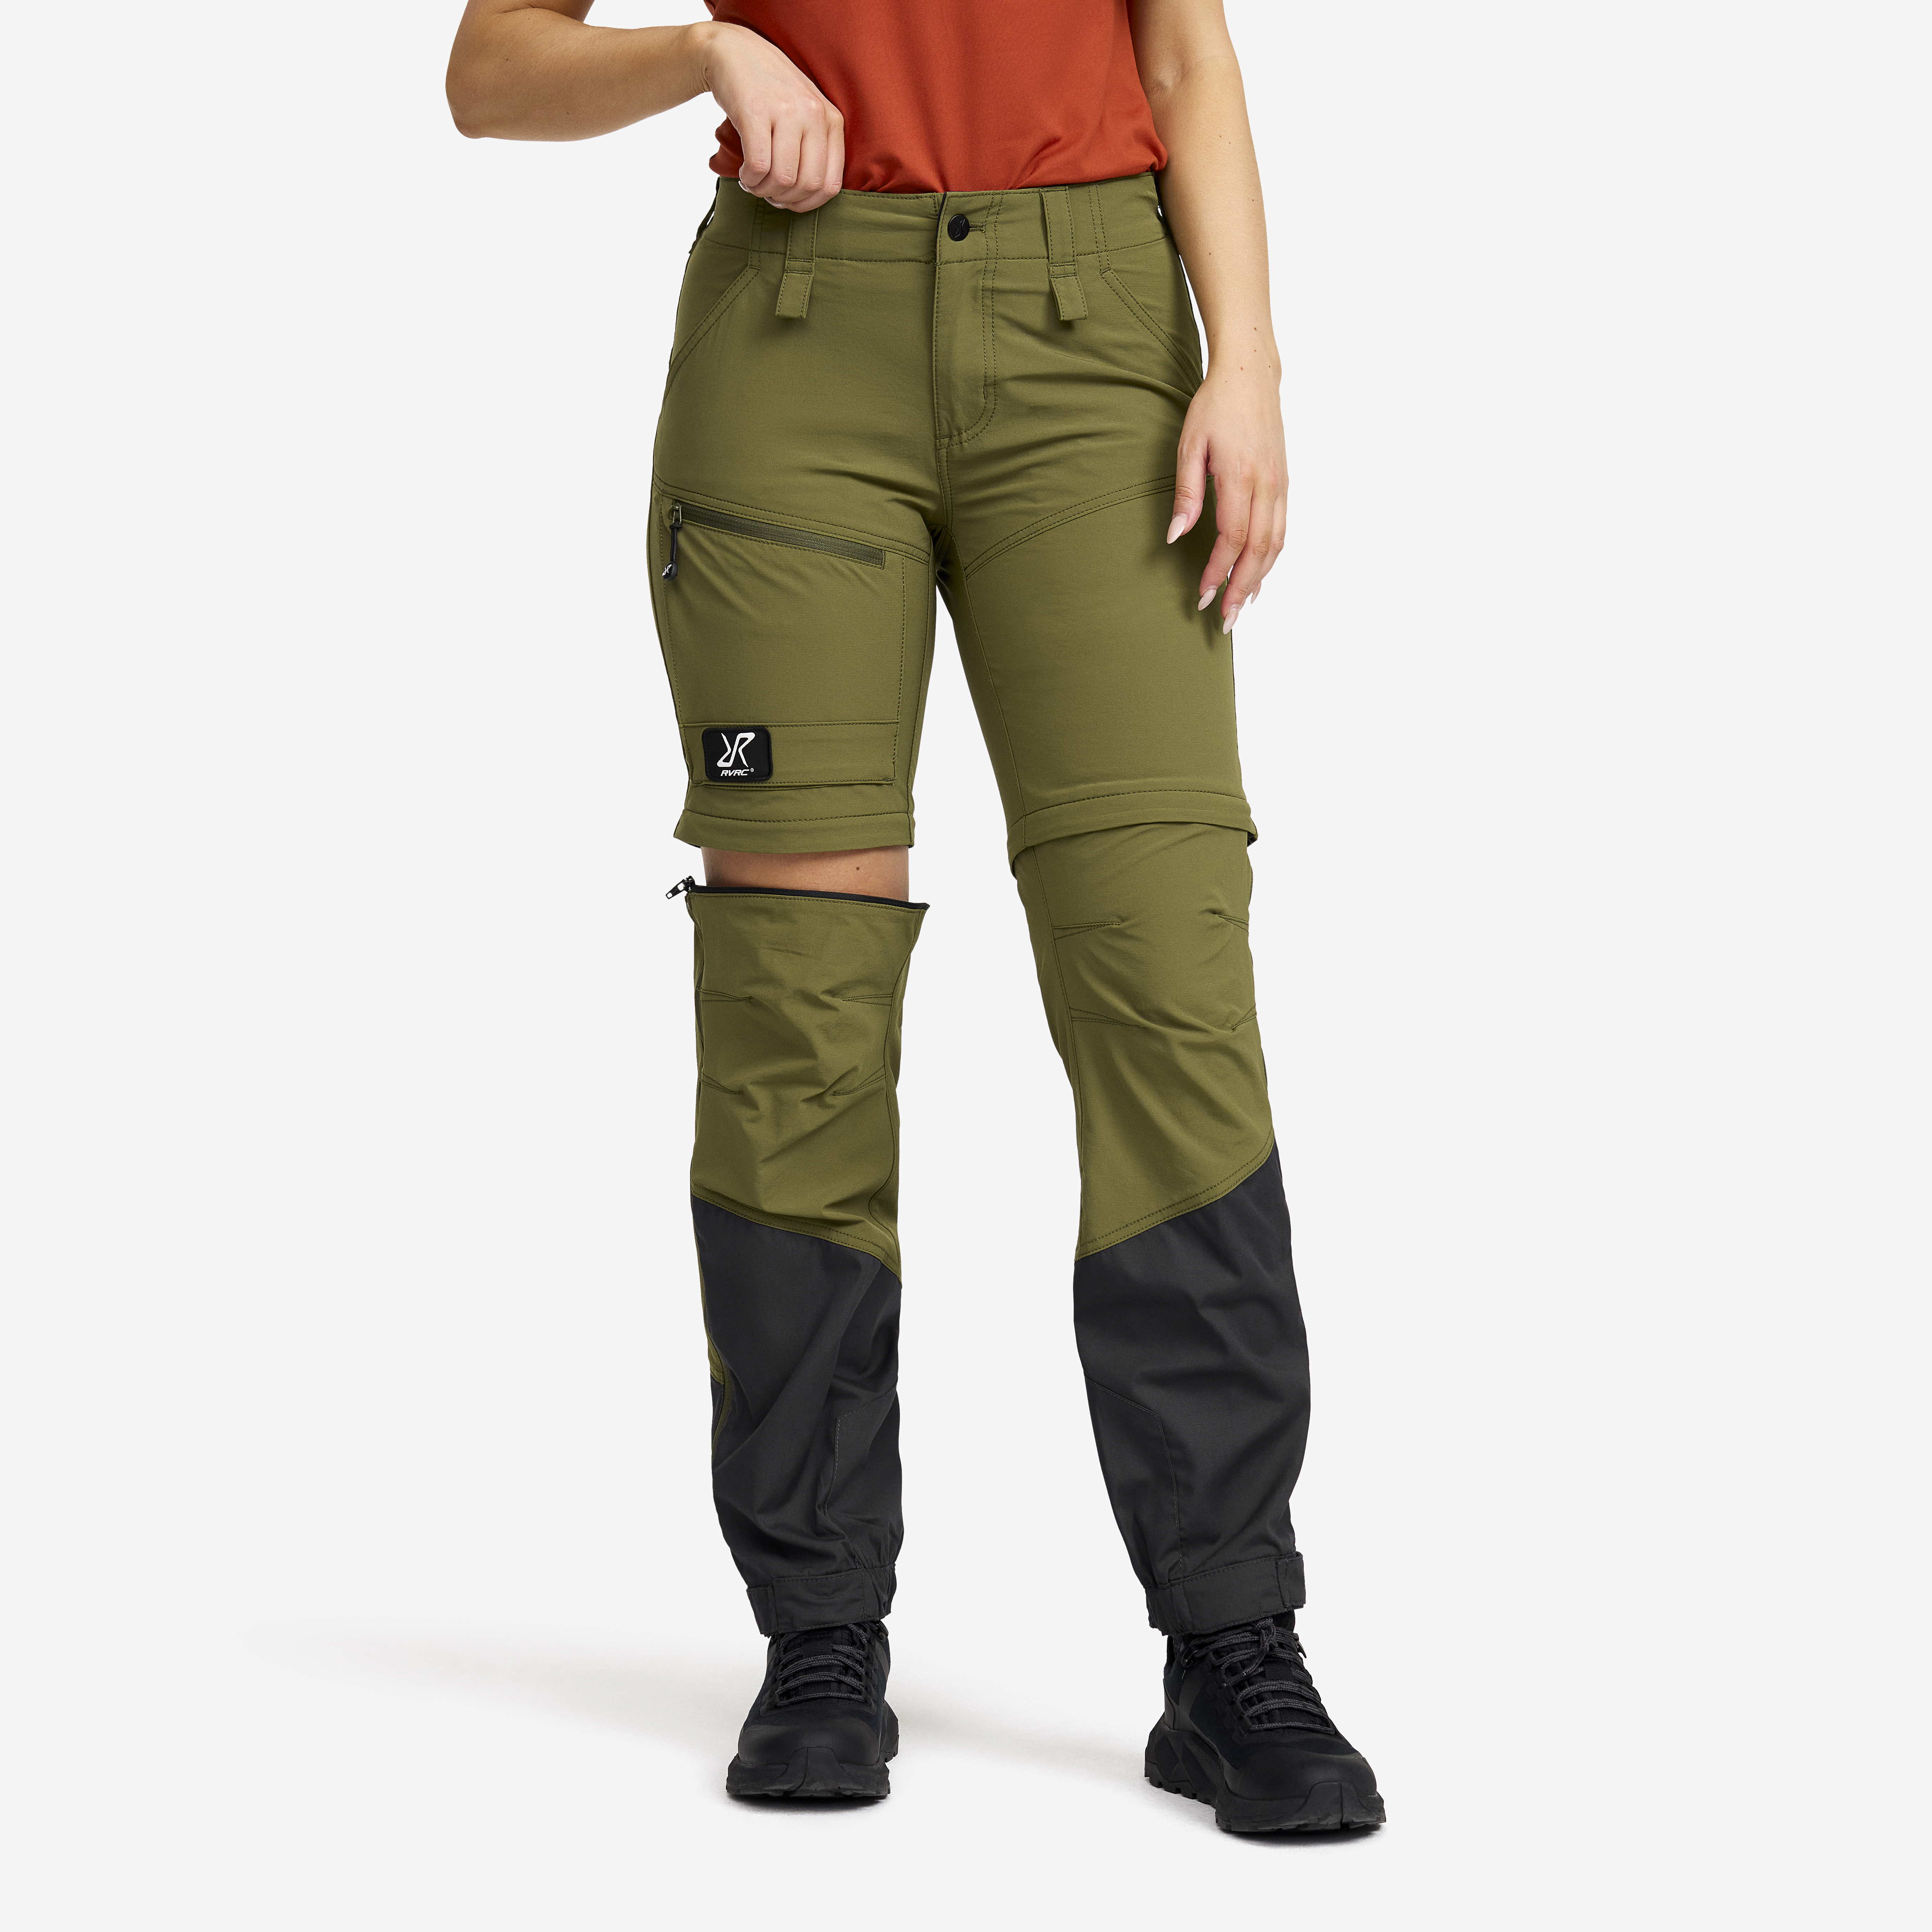 Range Pro Zip-off Trousers Burnt Olive/Anthracite Women